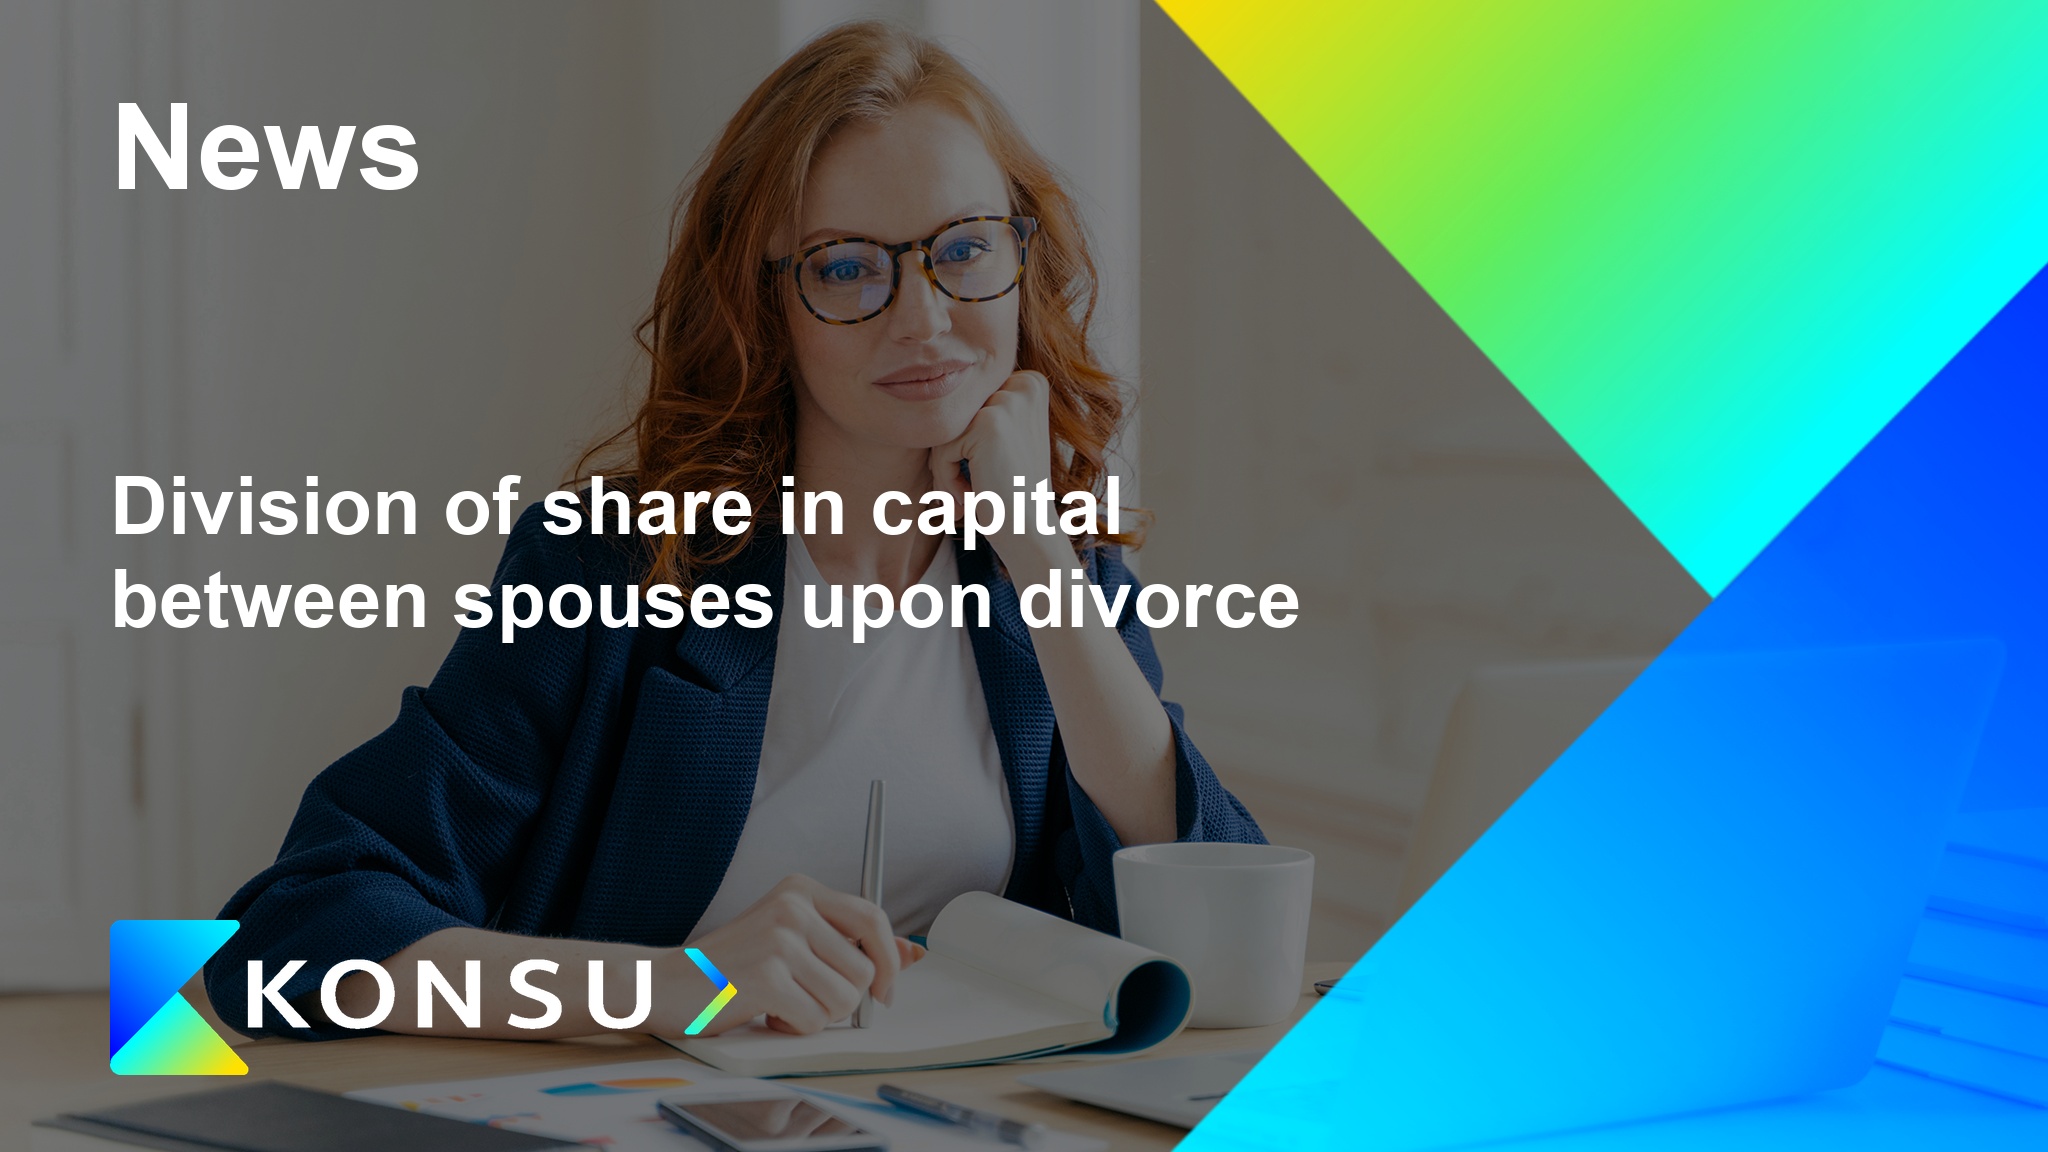 Division share capital between spouses upon divorce en konsu out